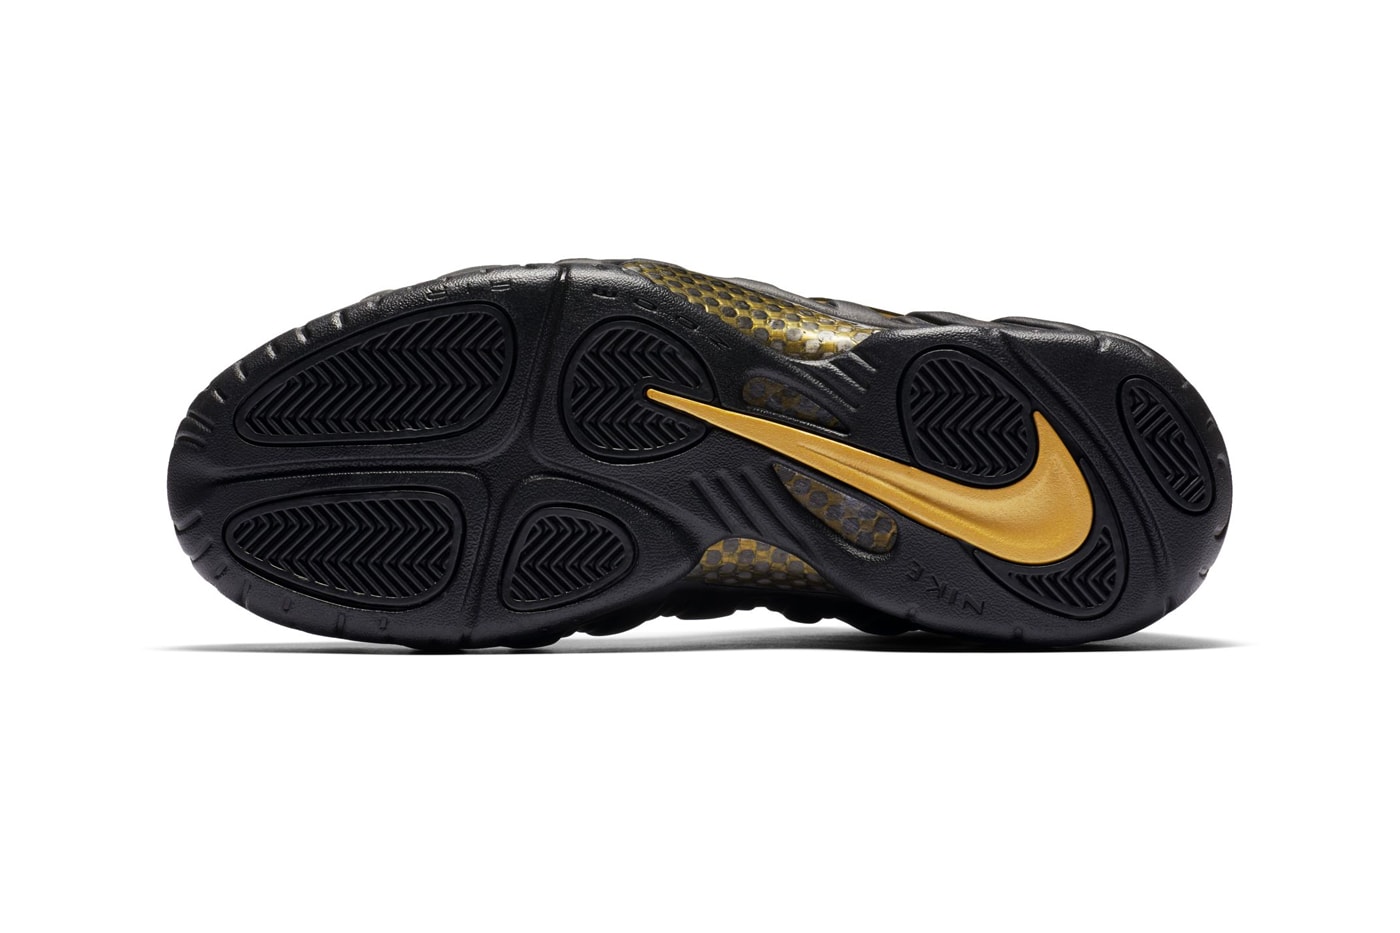 Nike Air Foamposite Pro Black Metallic Gold release info sneakers basketball